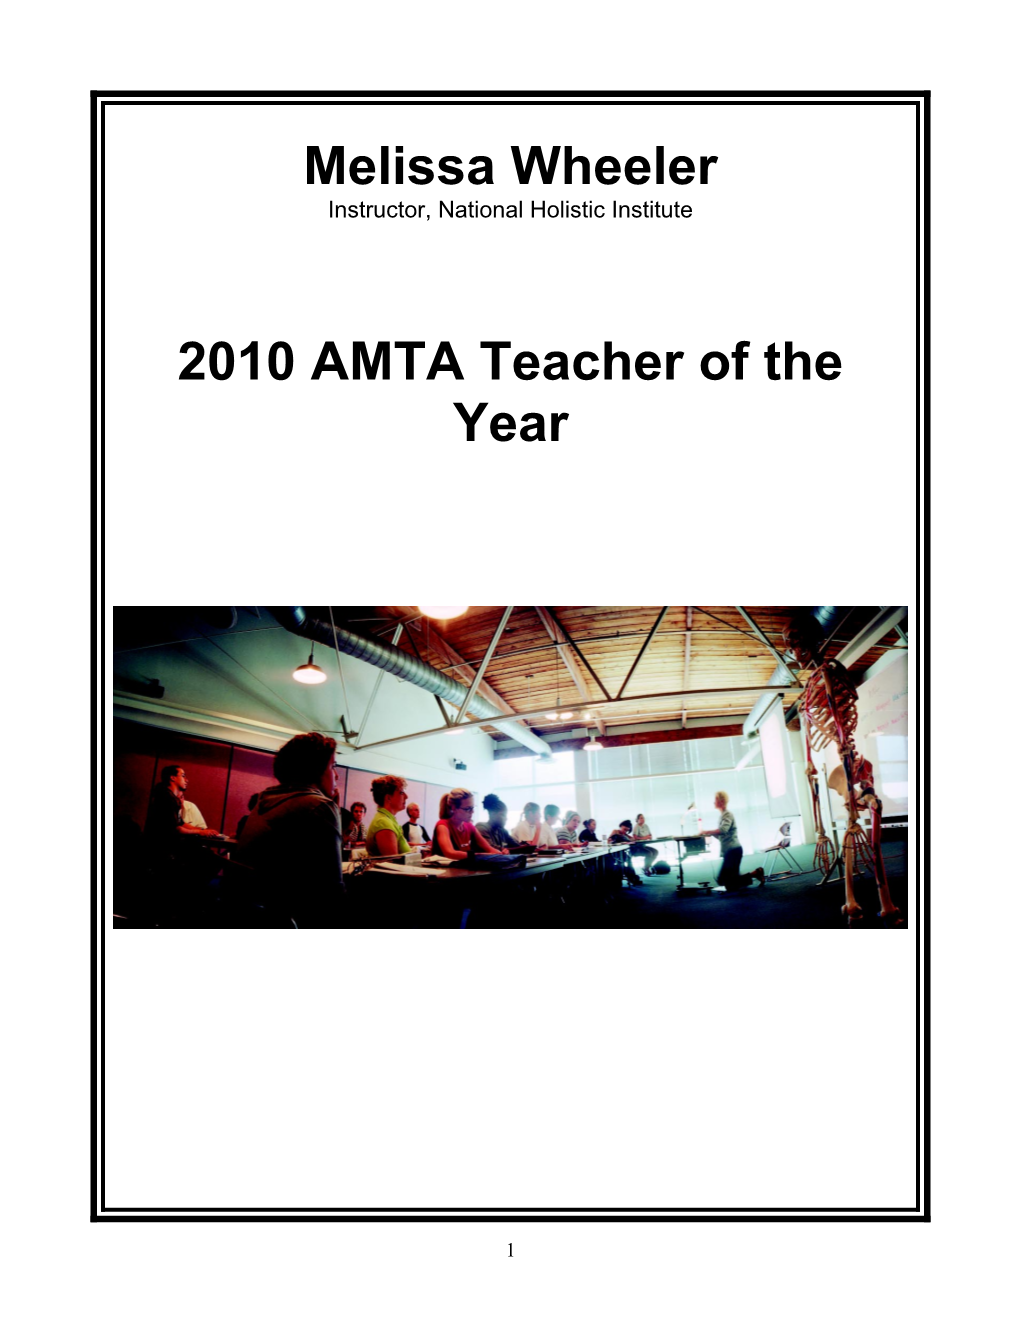 2010 AMTA Teacher of the Year